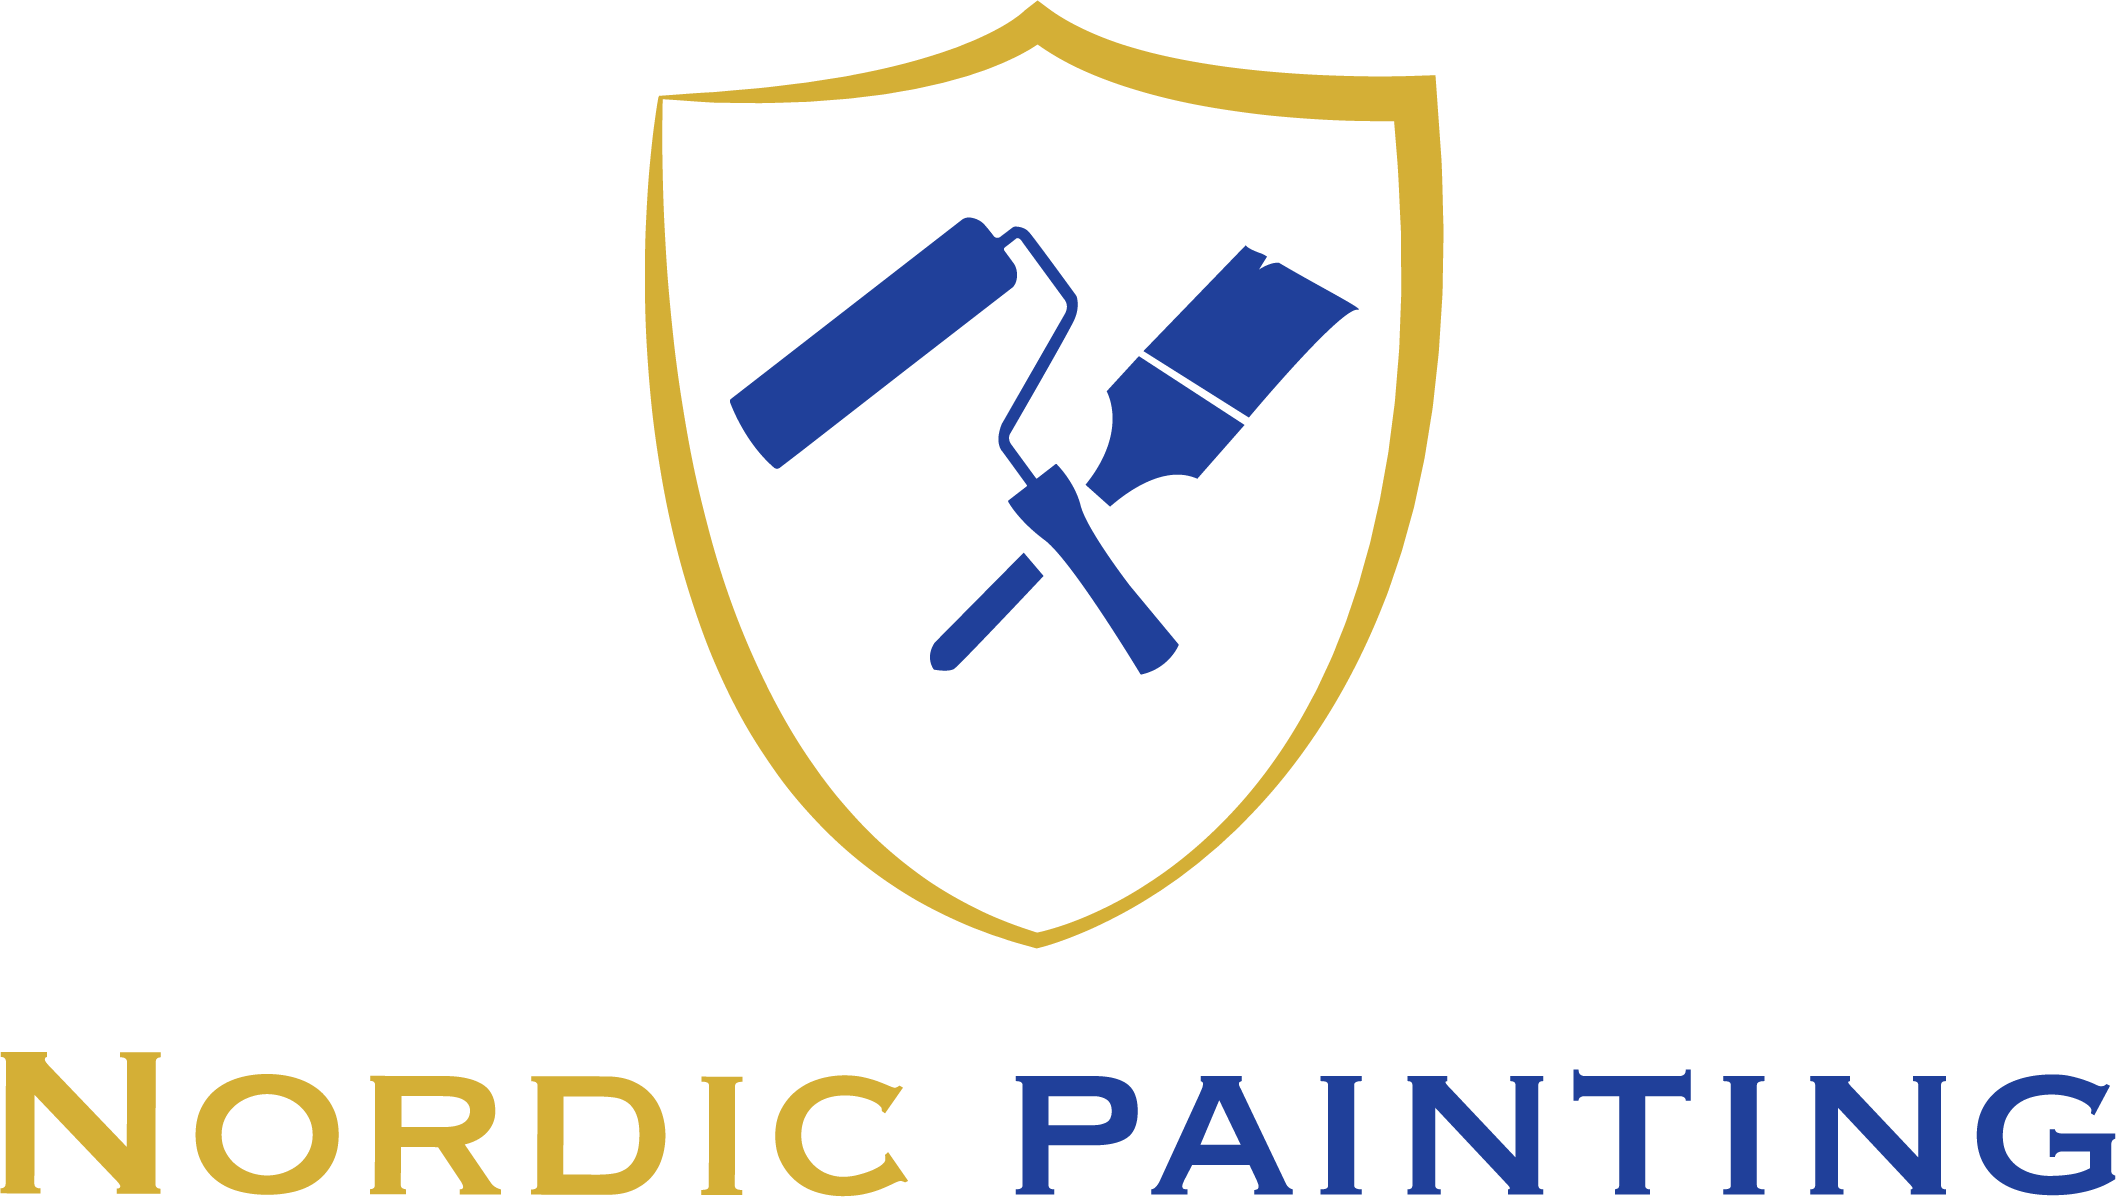 Nordic Painting Horizontal blue